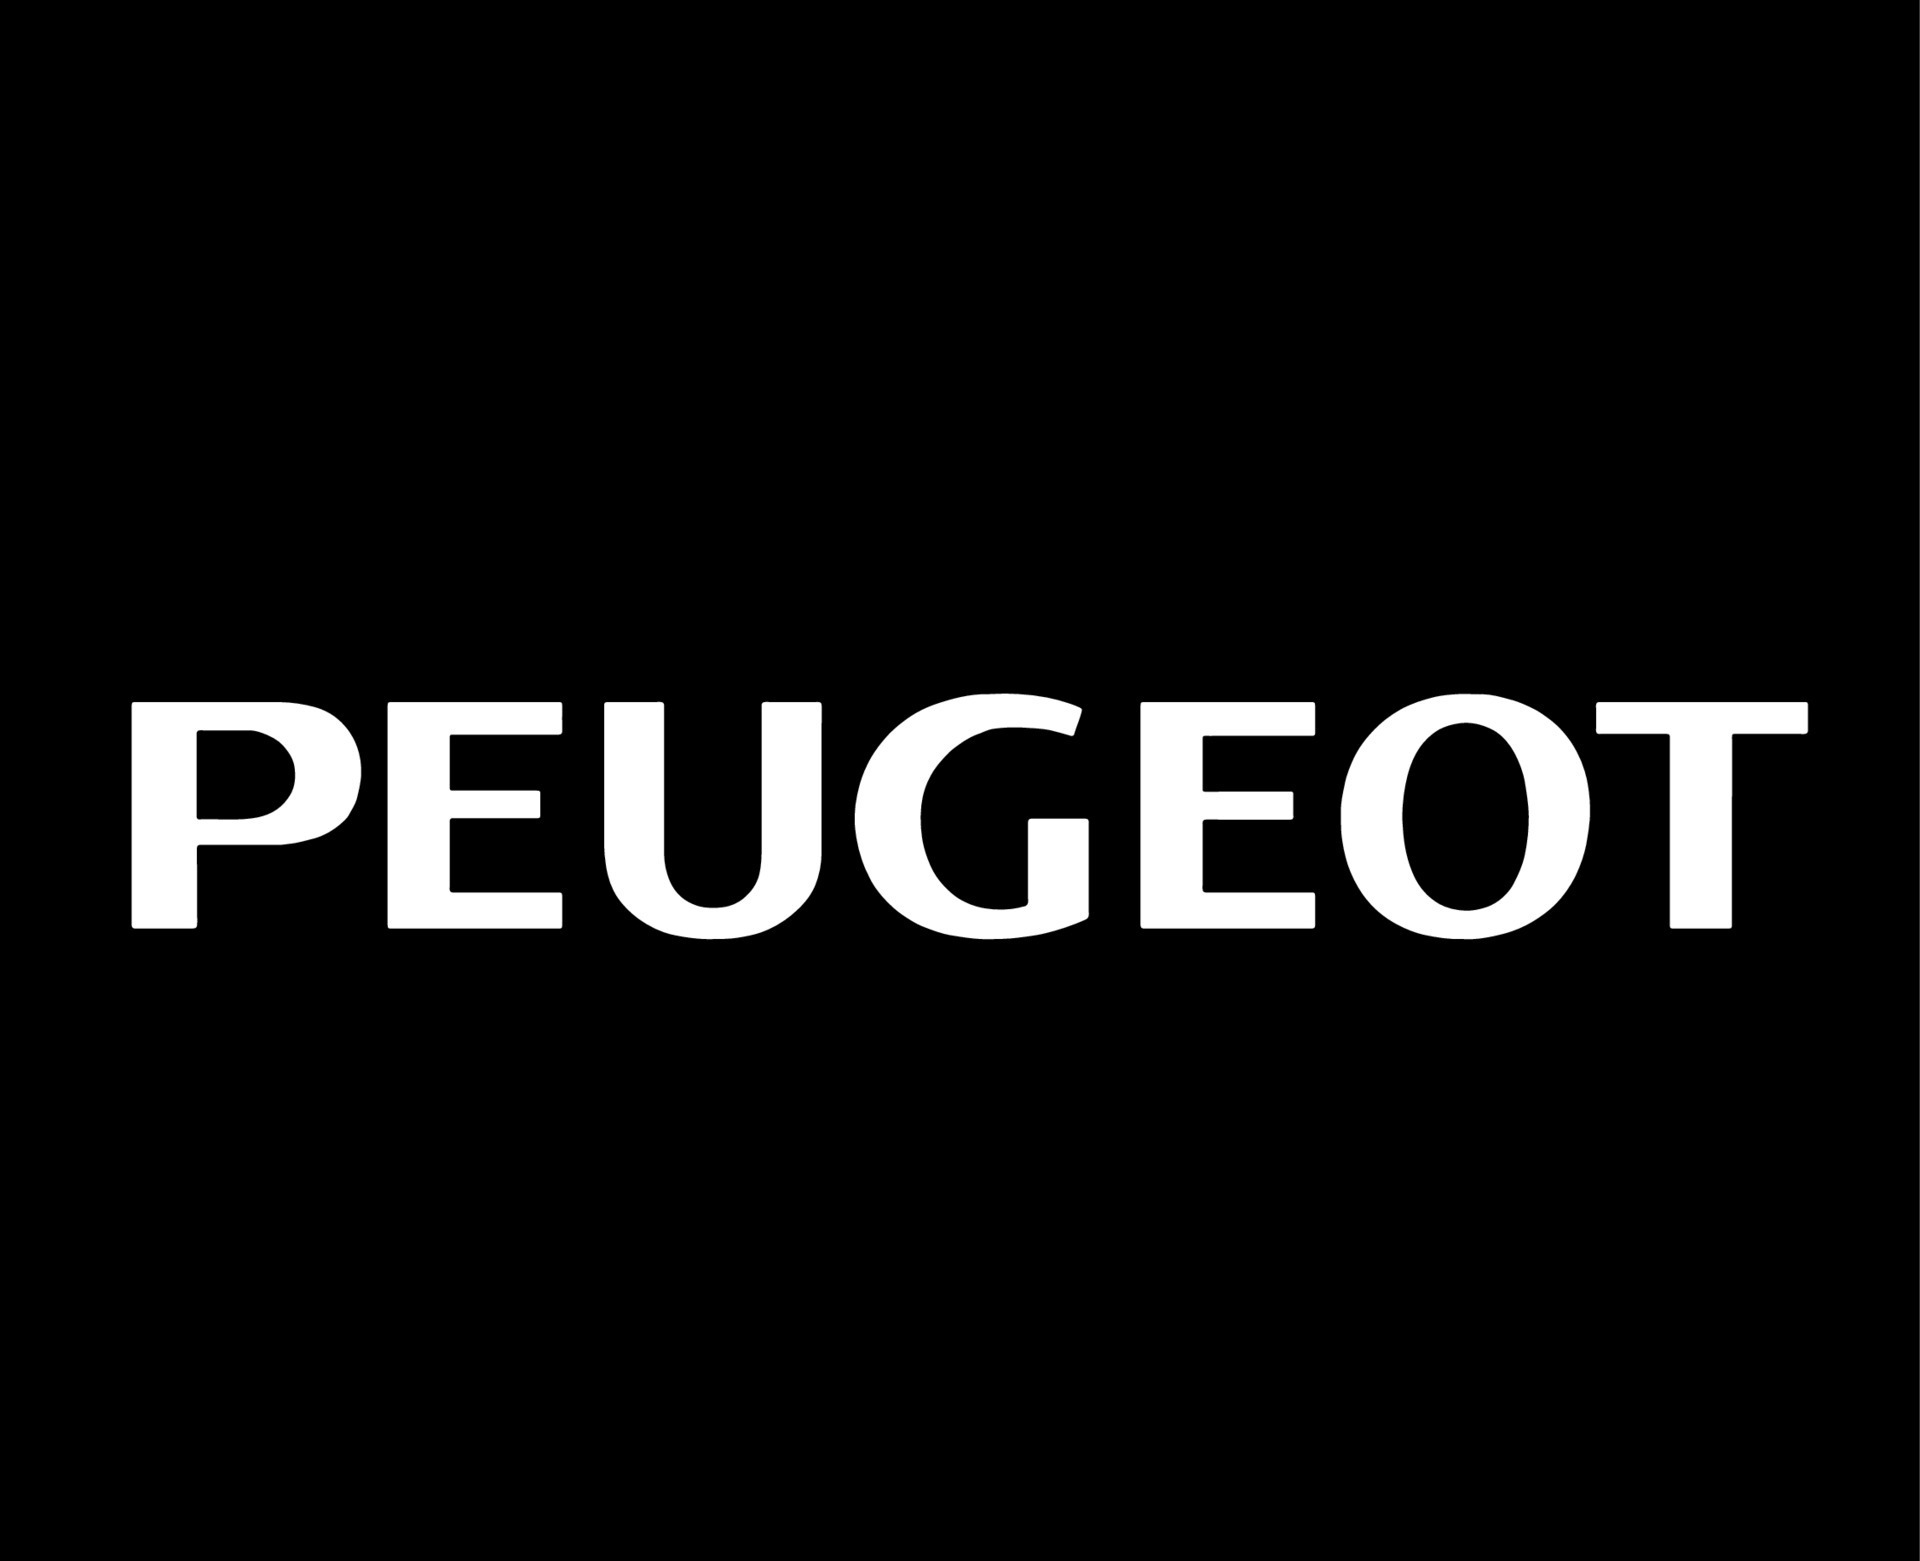 Peugeot brand logo symbol white design french car Vector Image